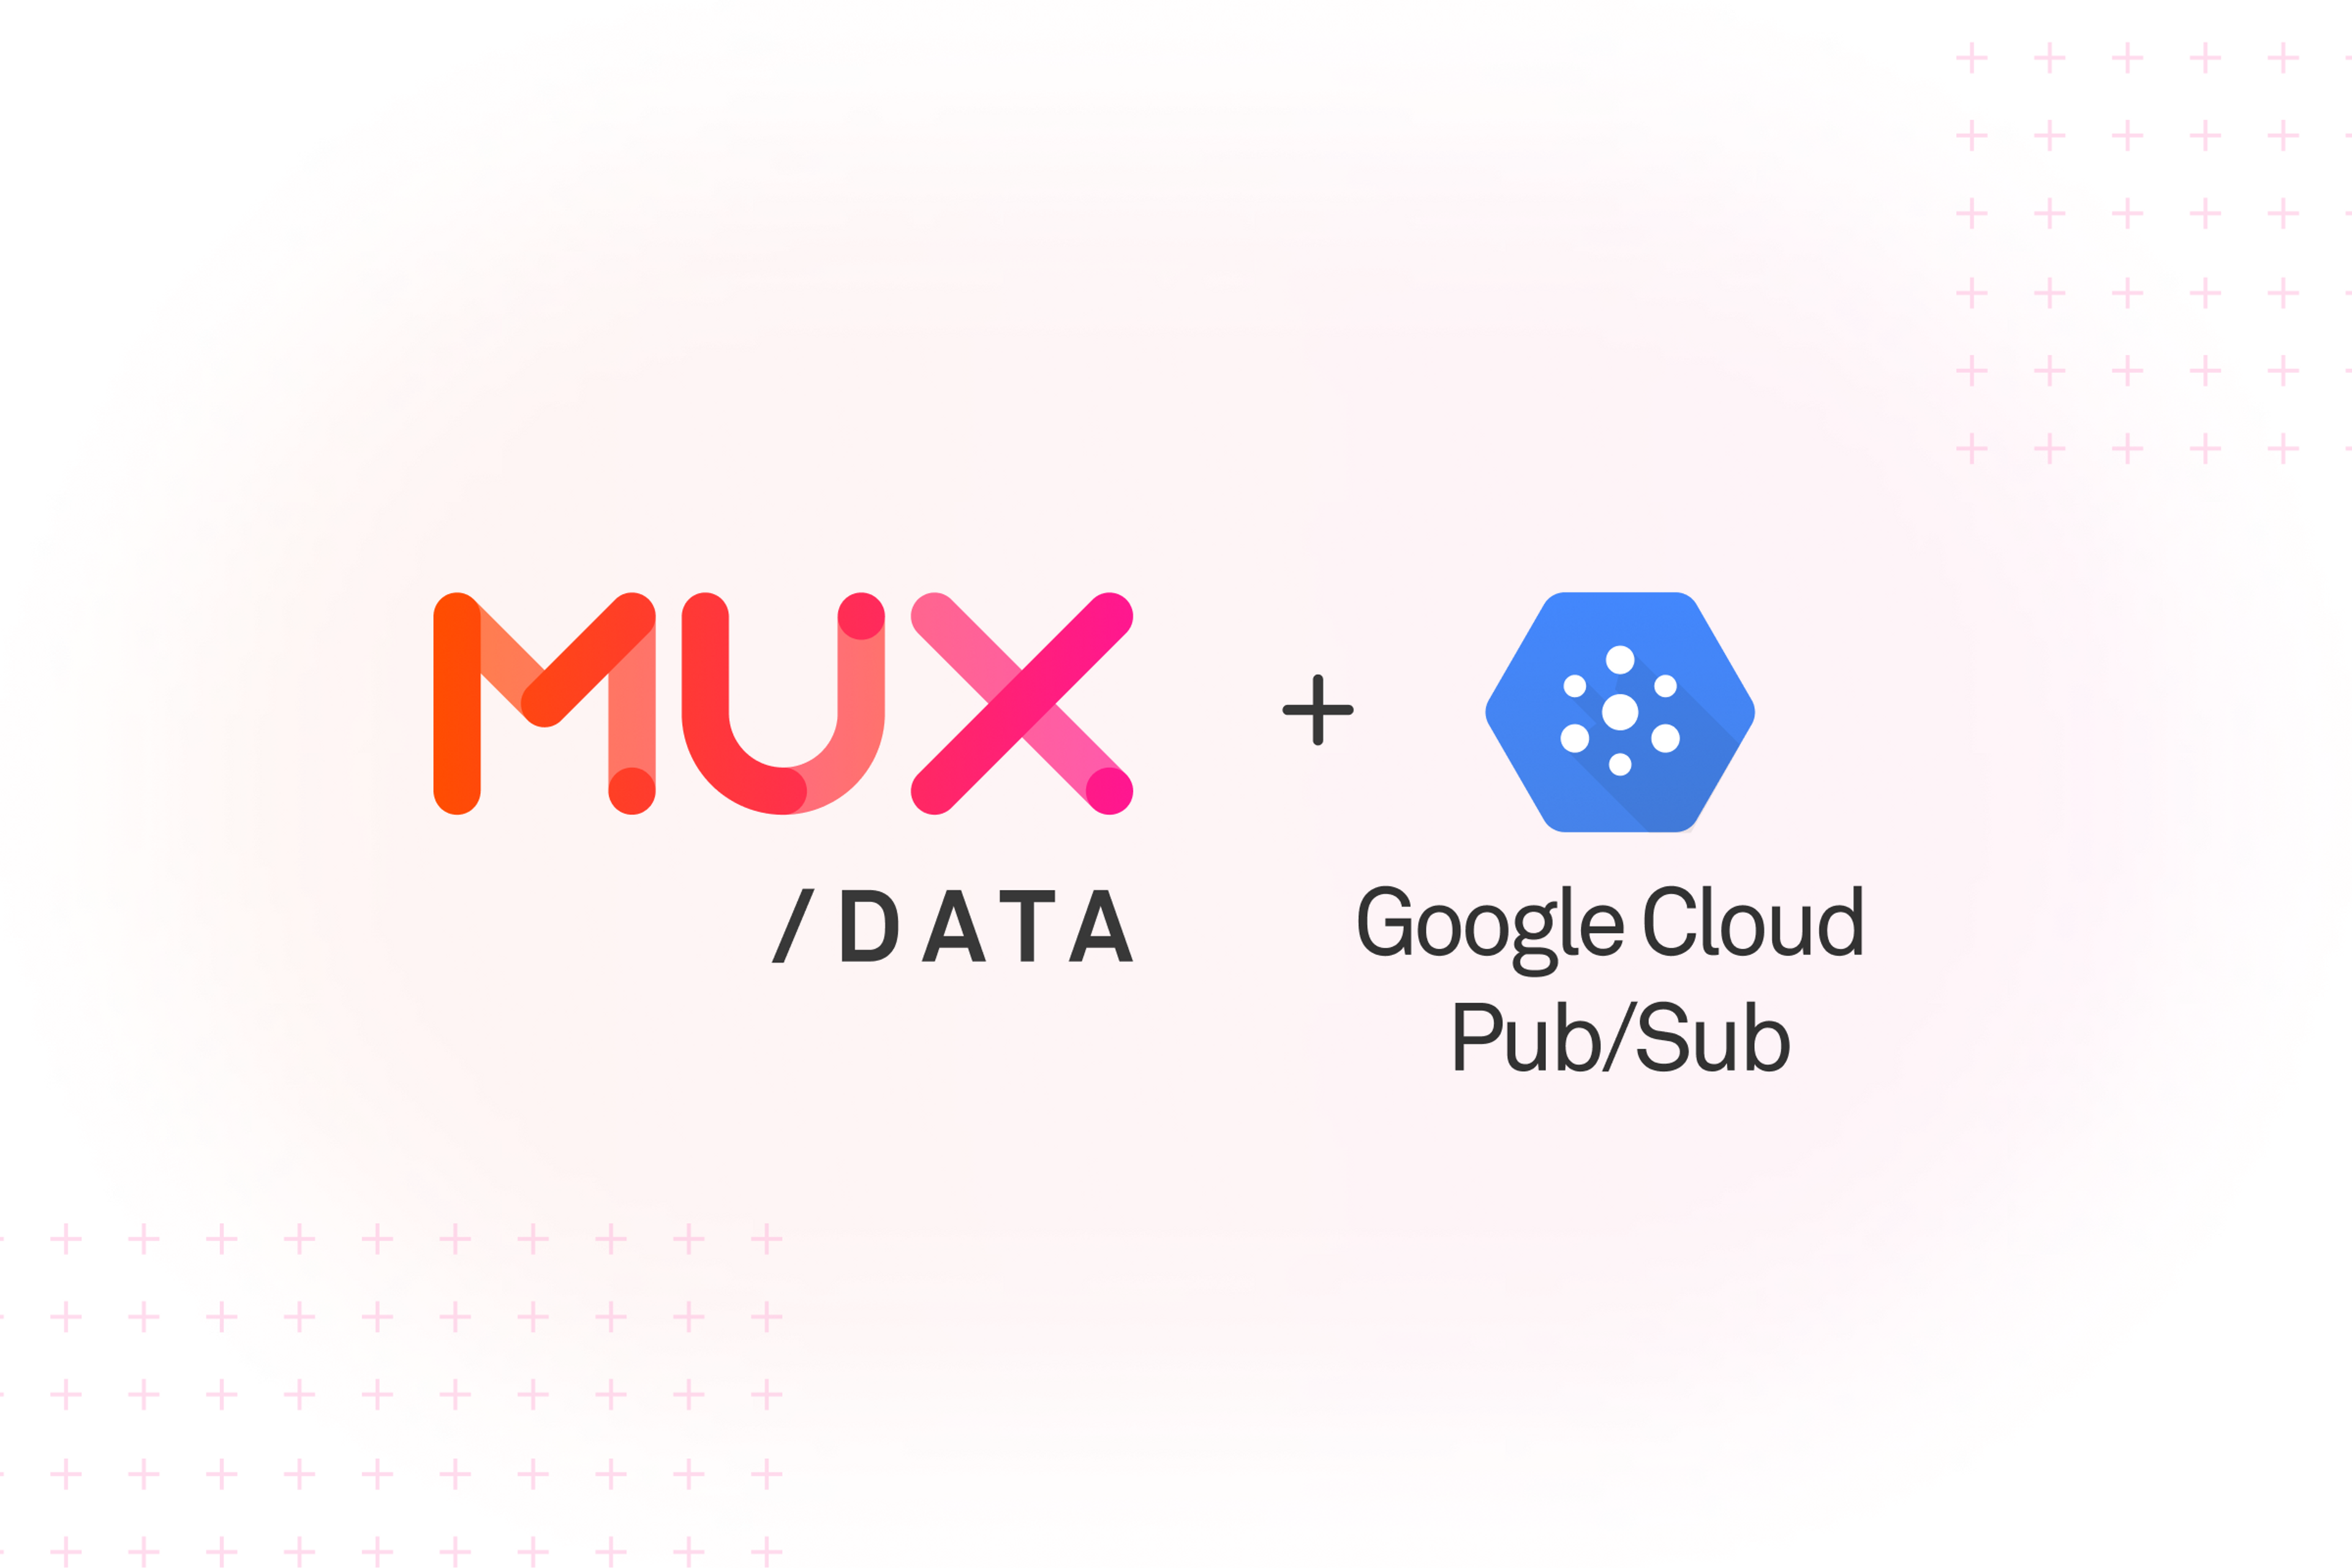 Mux Data logo plus Google Cloud Pub/Sub logo